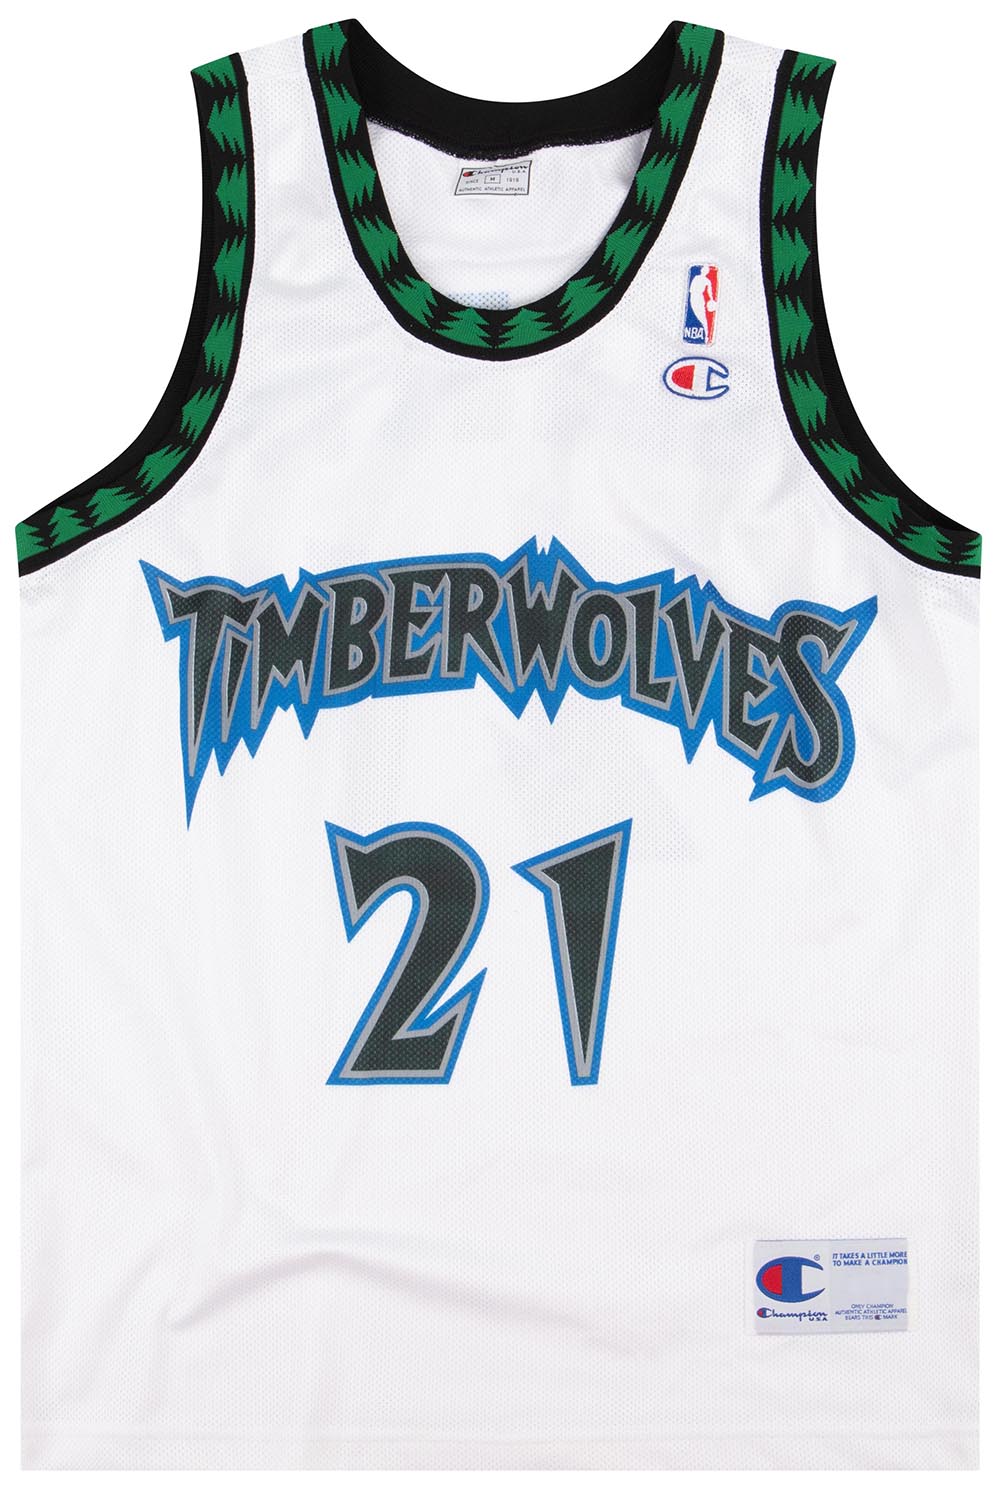 Minnesota Timberwolves Kevin Garnett #21 Vintage Starter NBA